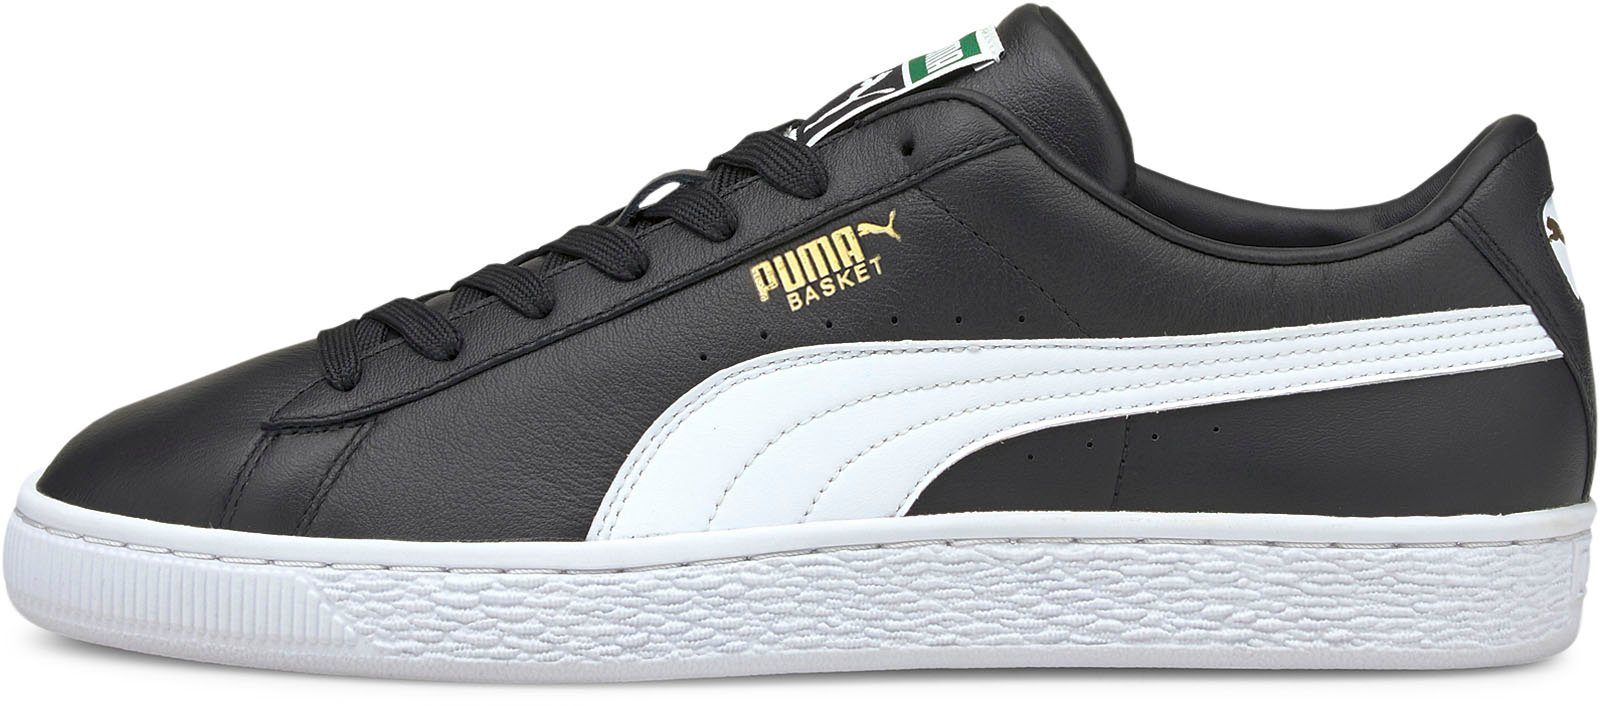 XXI Classic Sneaker White Black PUMA Basket